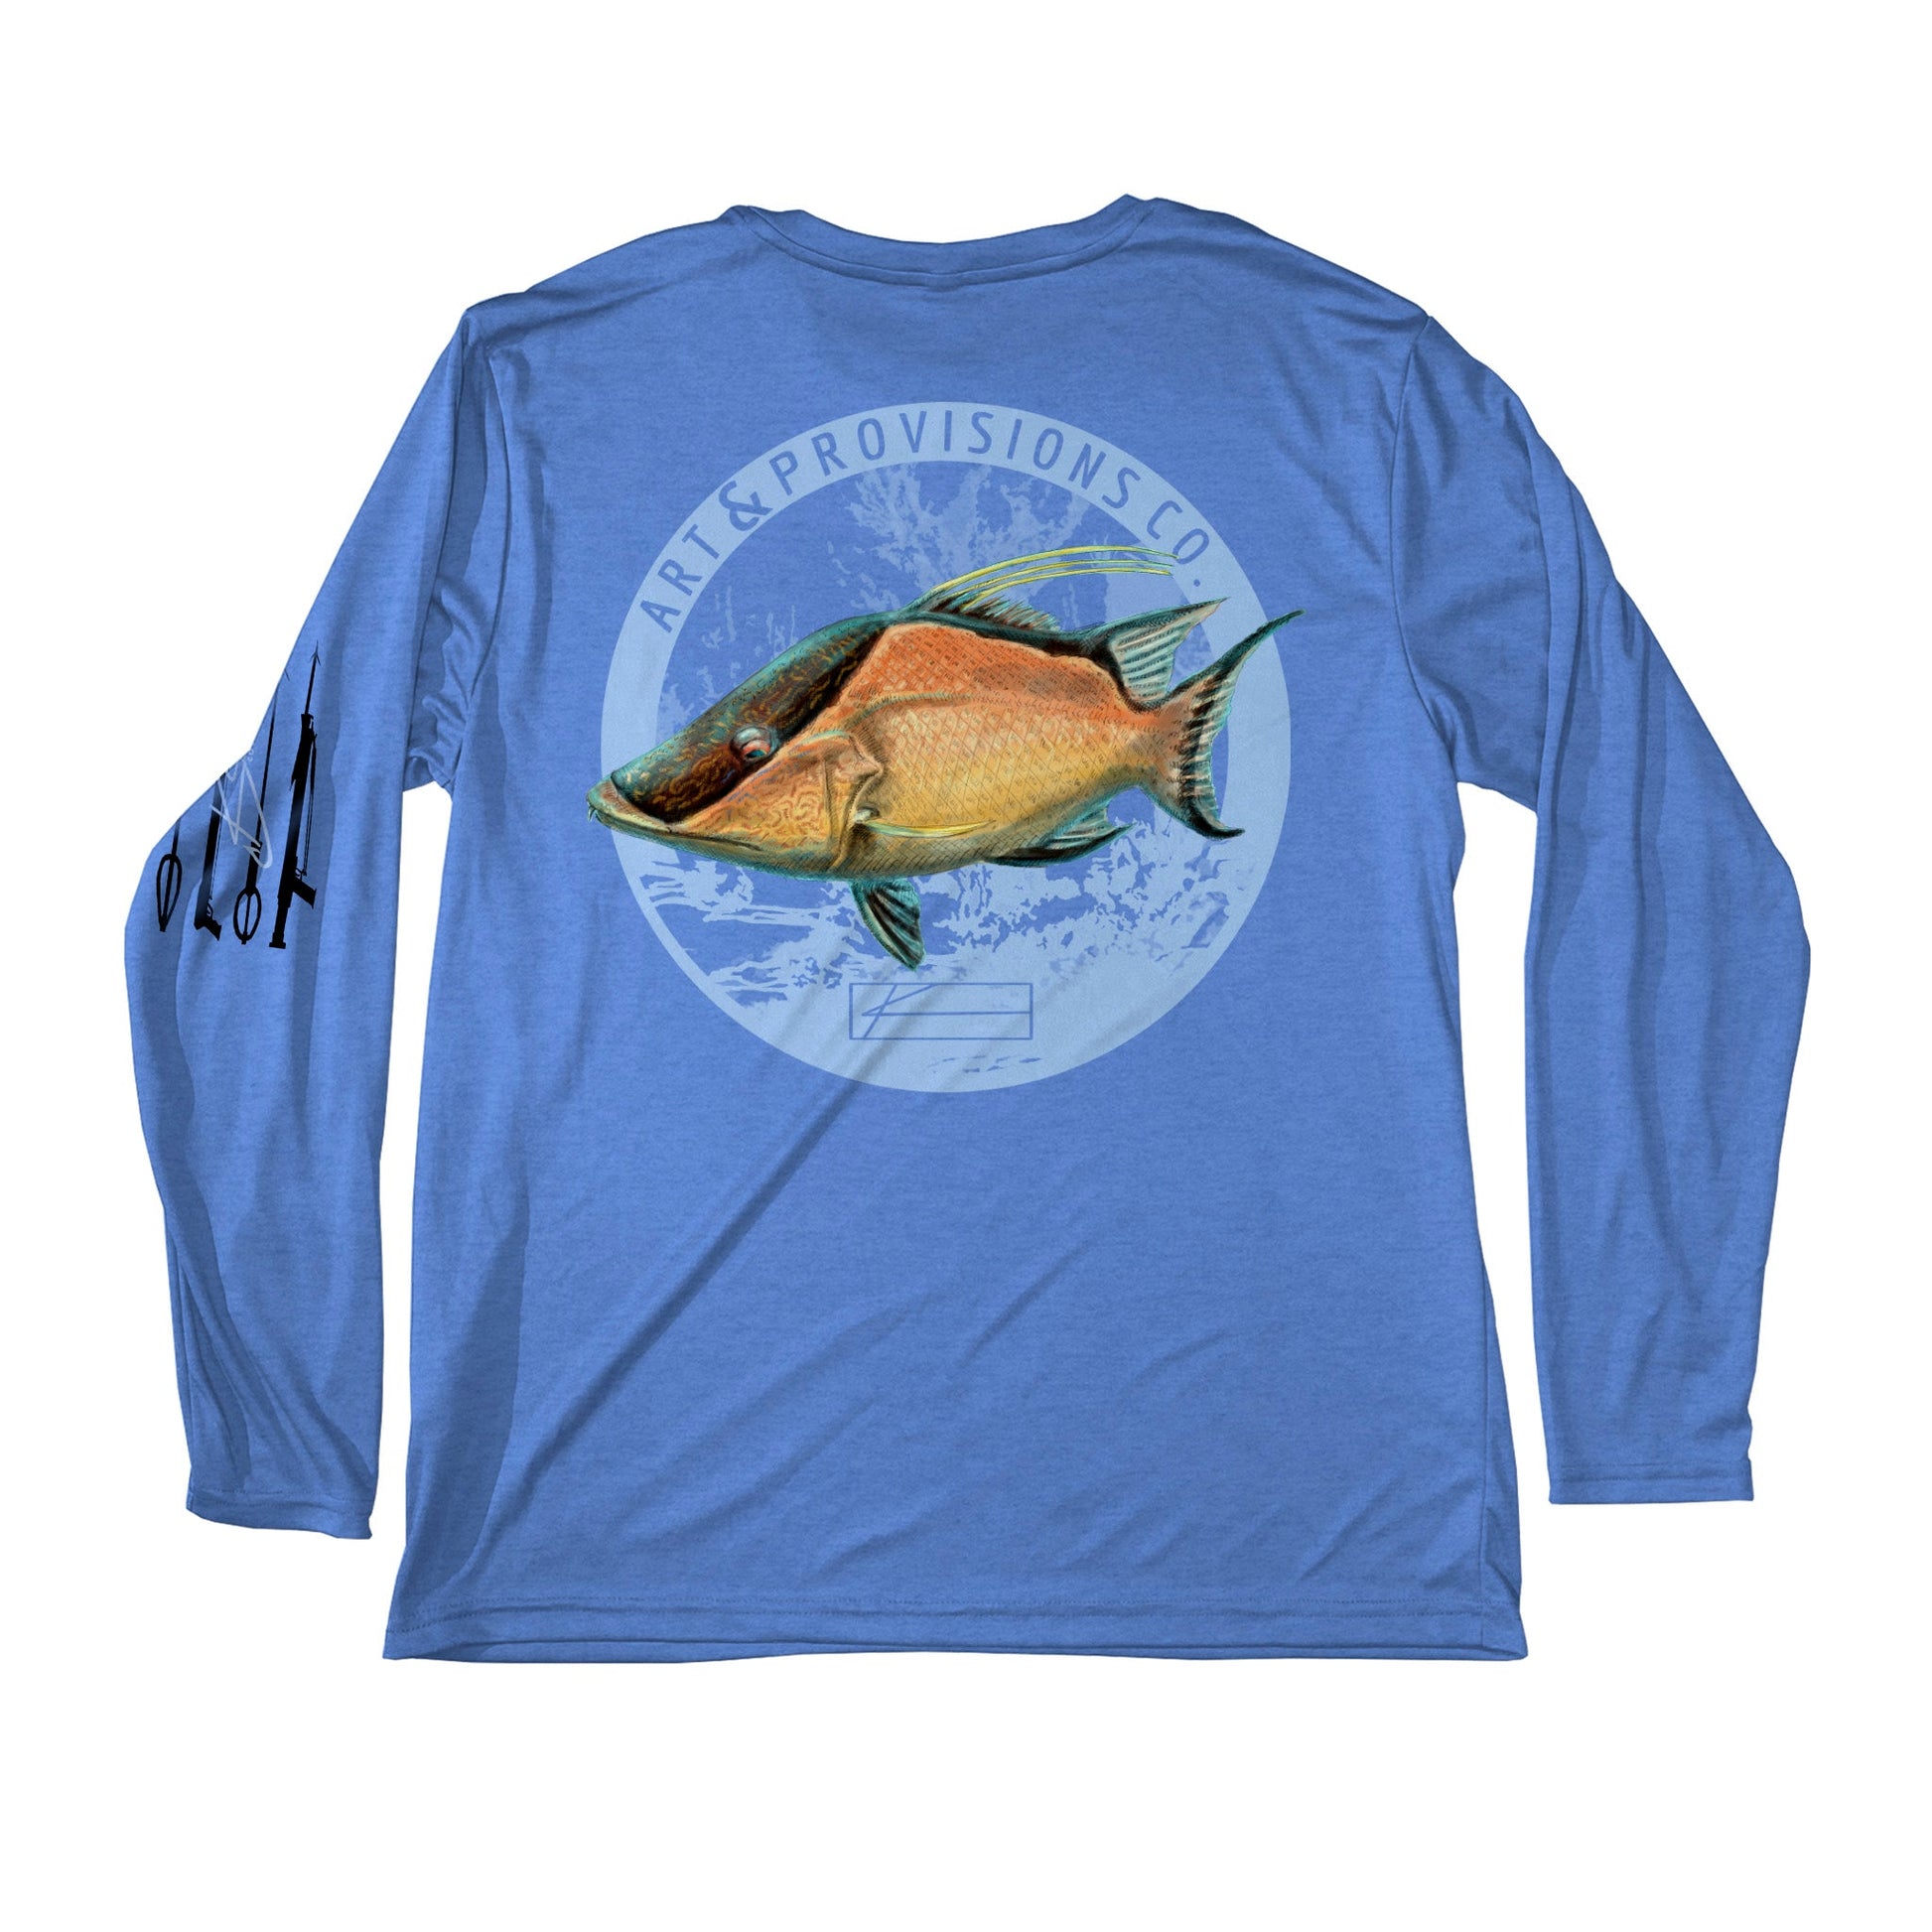 Kscott Hogfish Art and Provisions Longsleeve Shirt - Dogfish Tackle & Marine